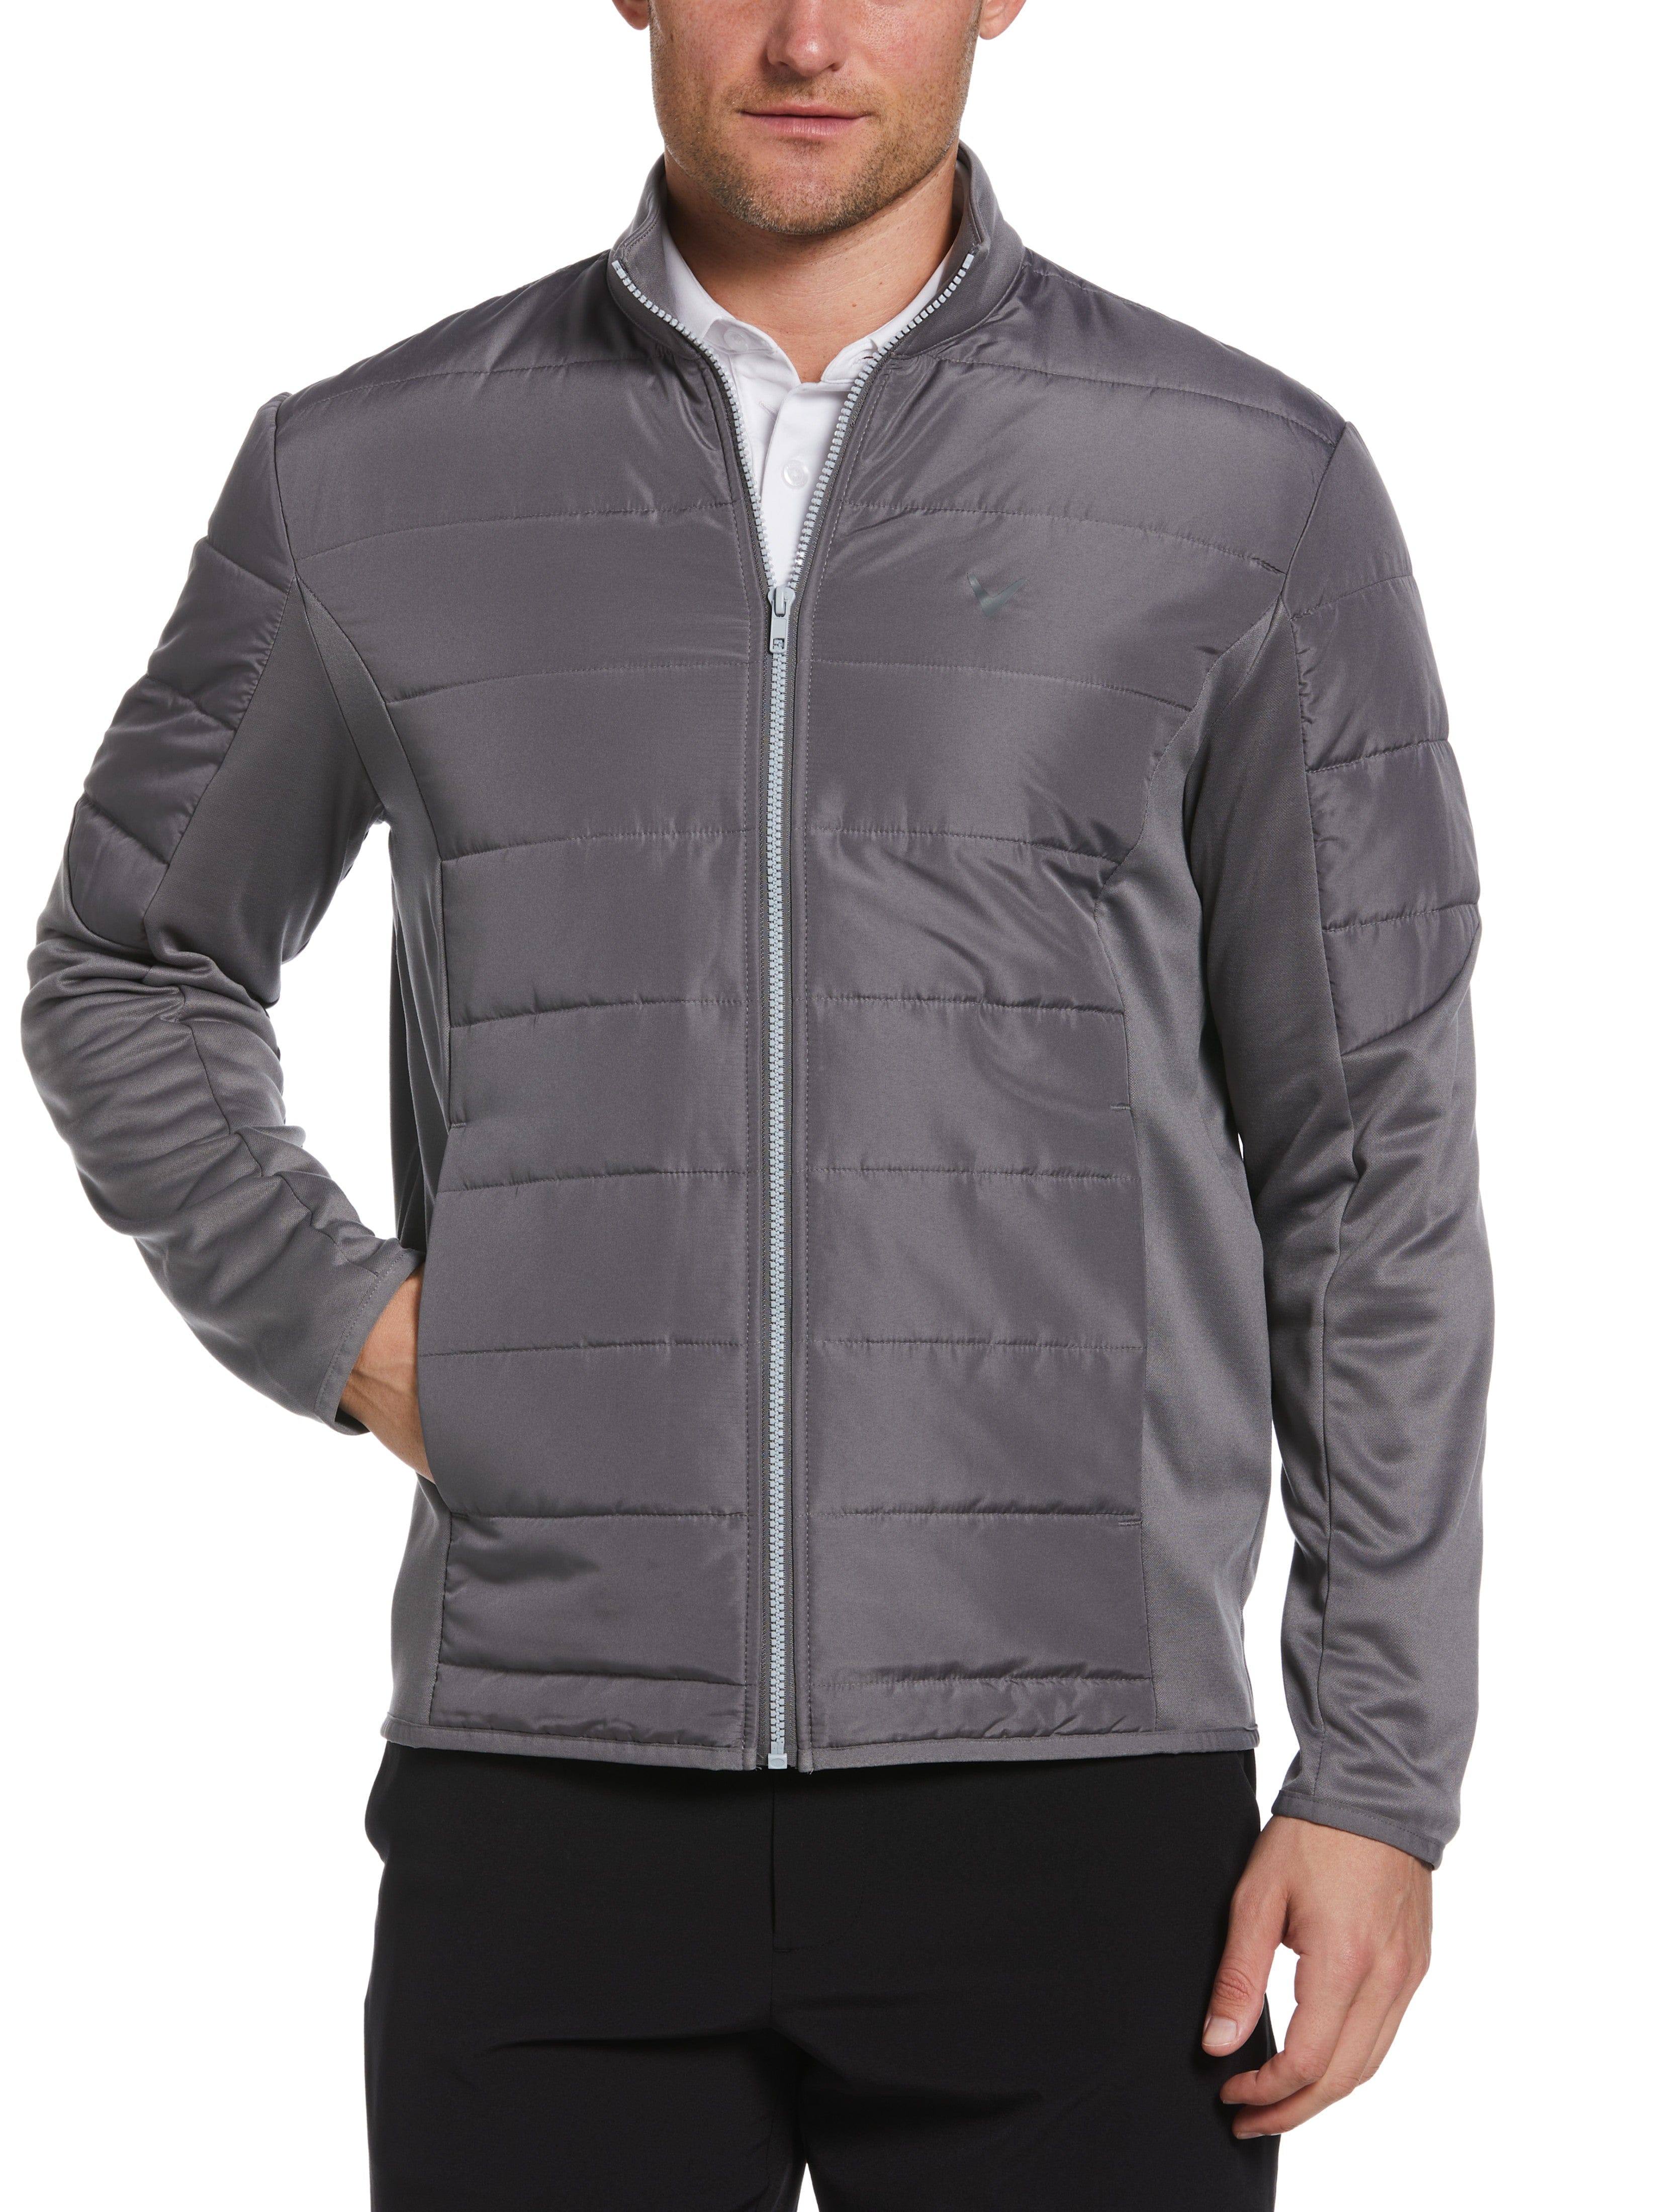 Callaway Apparel Mens Hybrid Performance Puffer Jacket Top, Size 2XL, Quiet Shade Gray, 100% Polyester | Golf Apparel Shop